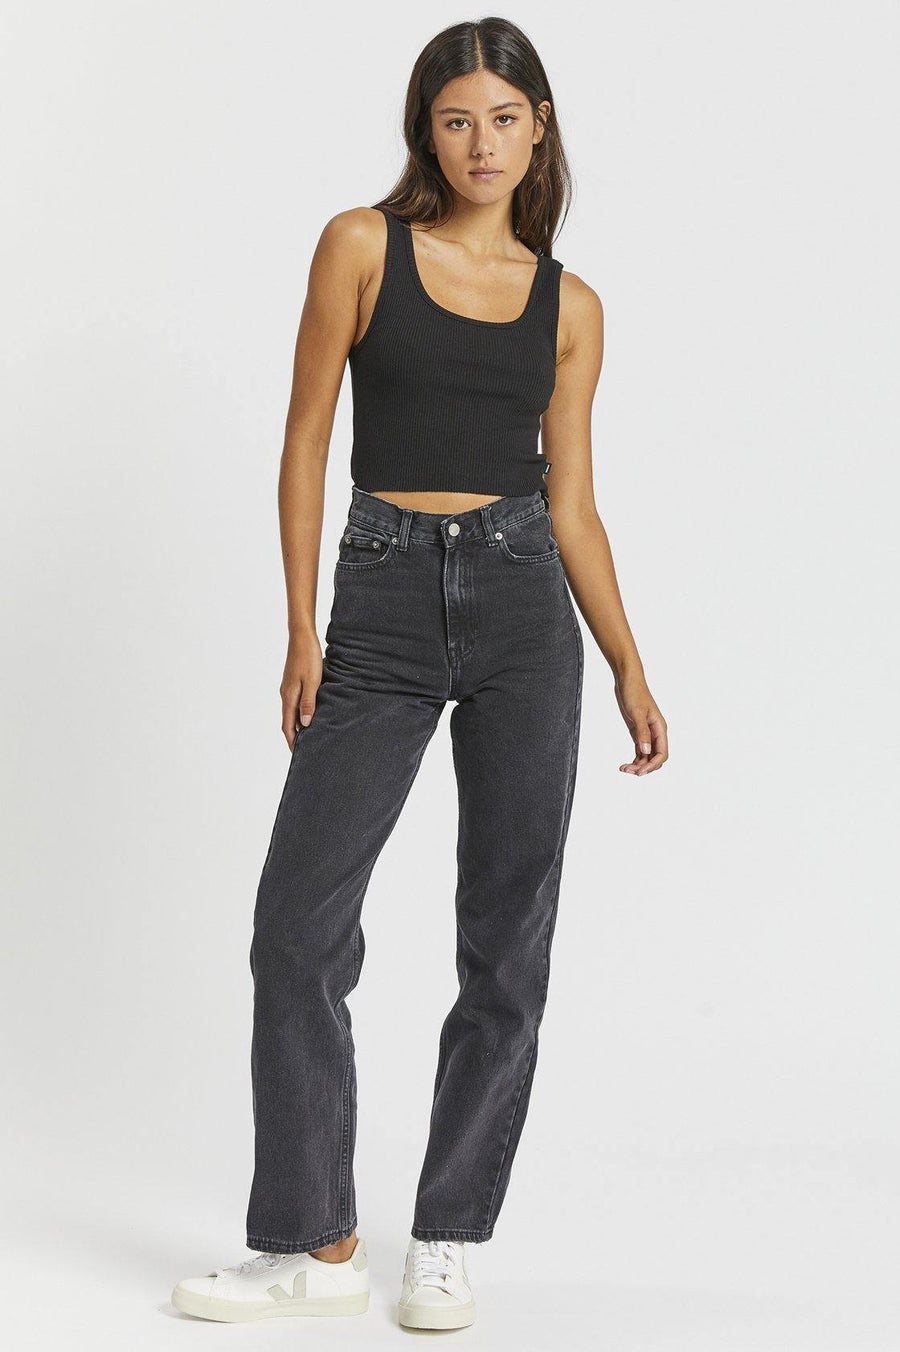 Maxida Top - Black - Dr Denim Jeans - Australia & NZ